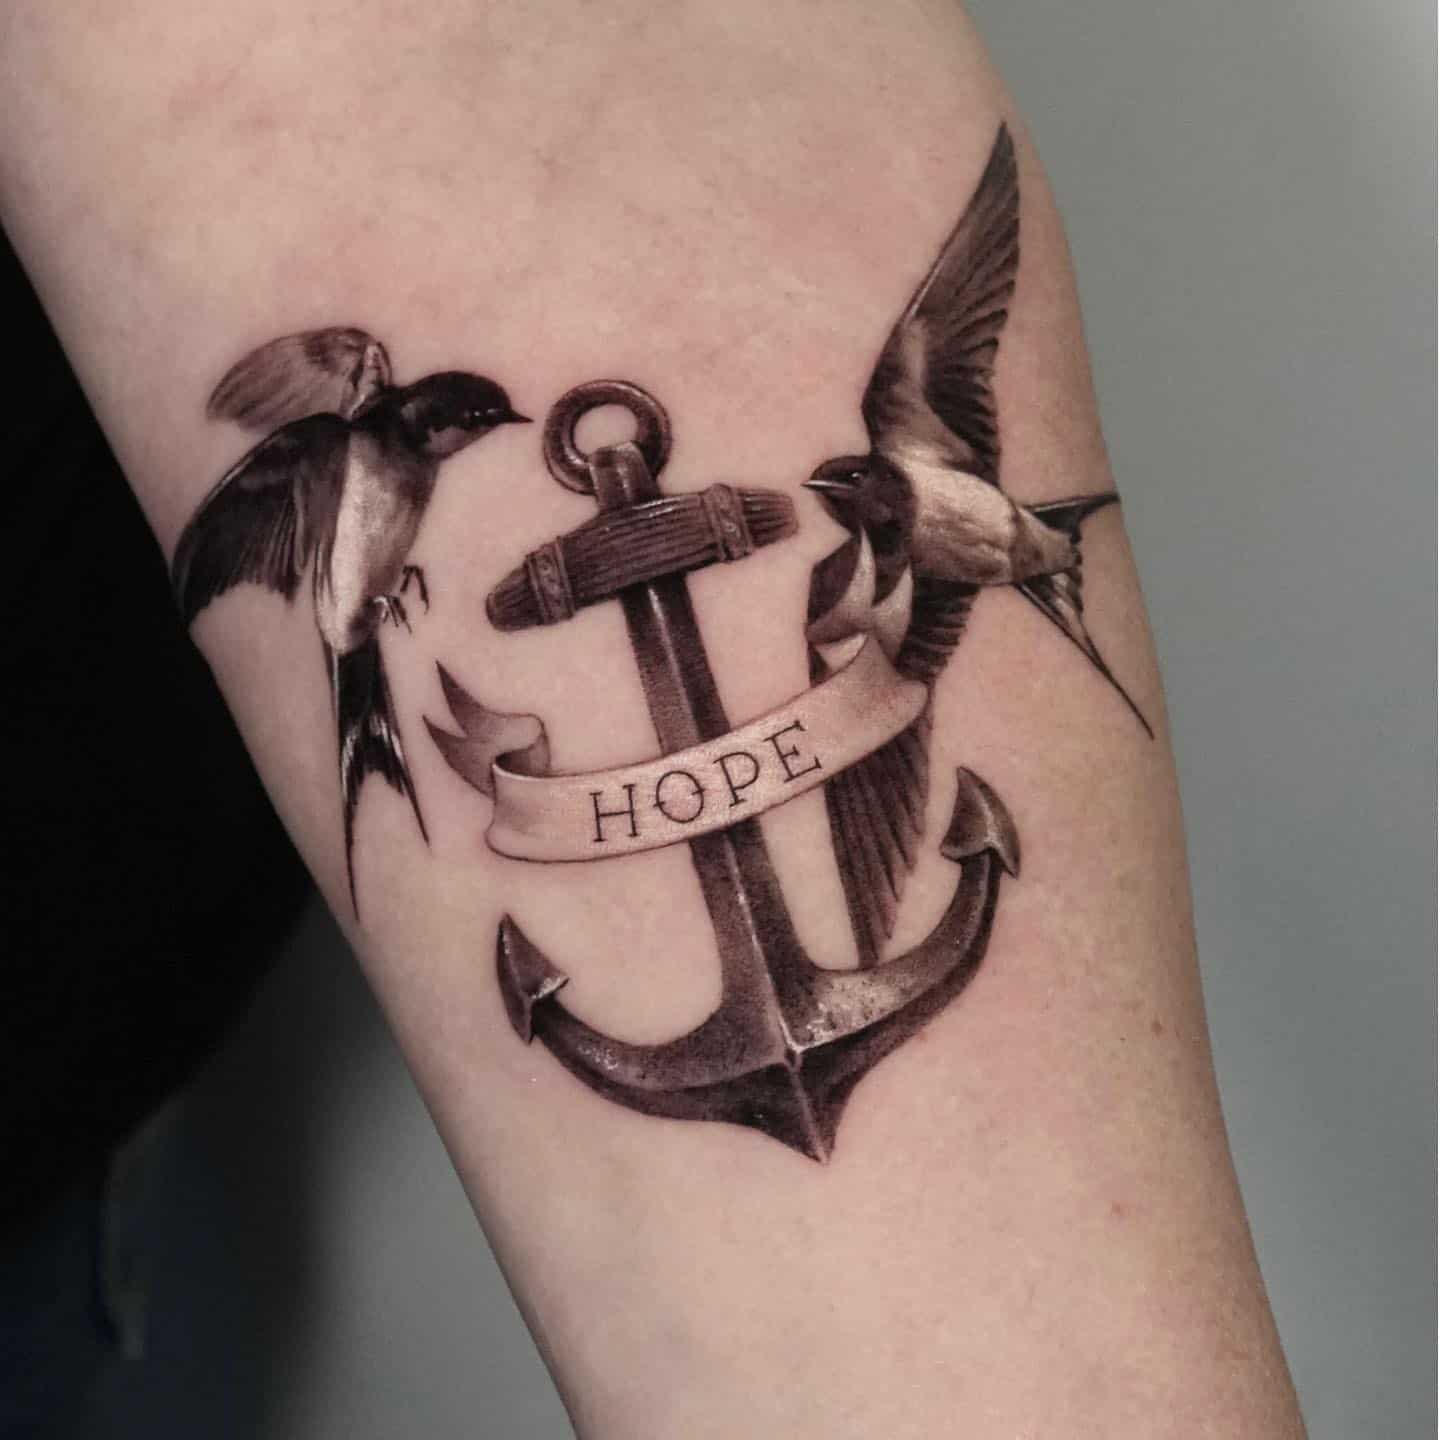 Cute anchor tattoo by goldy z